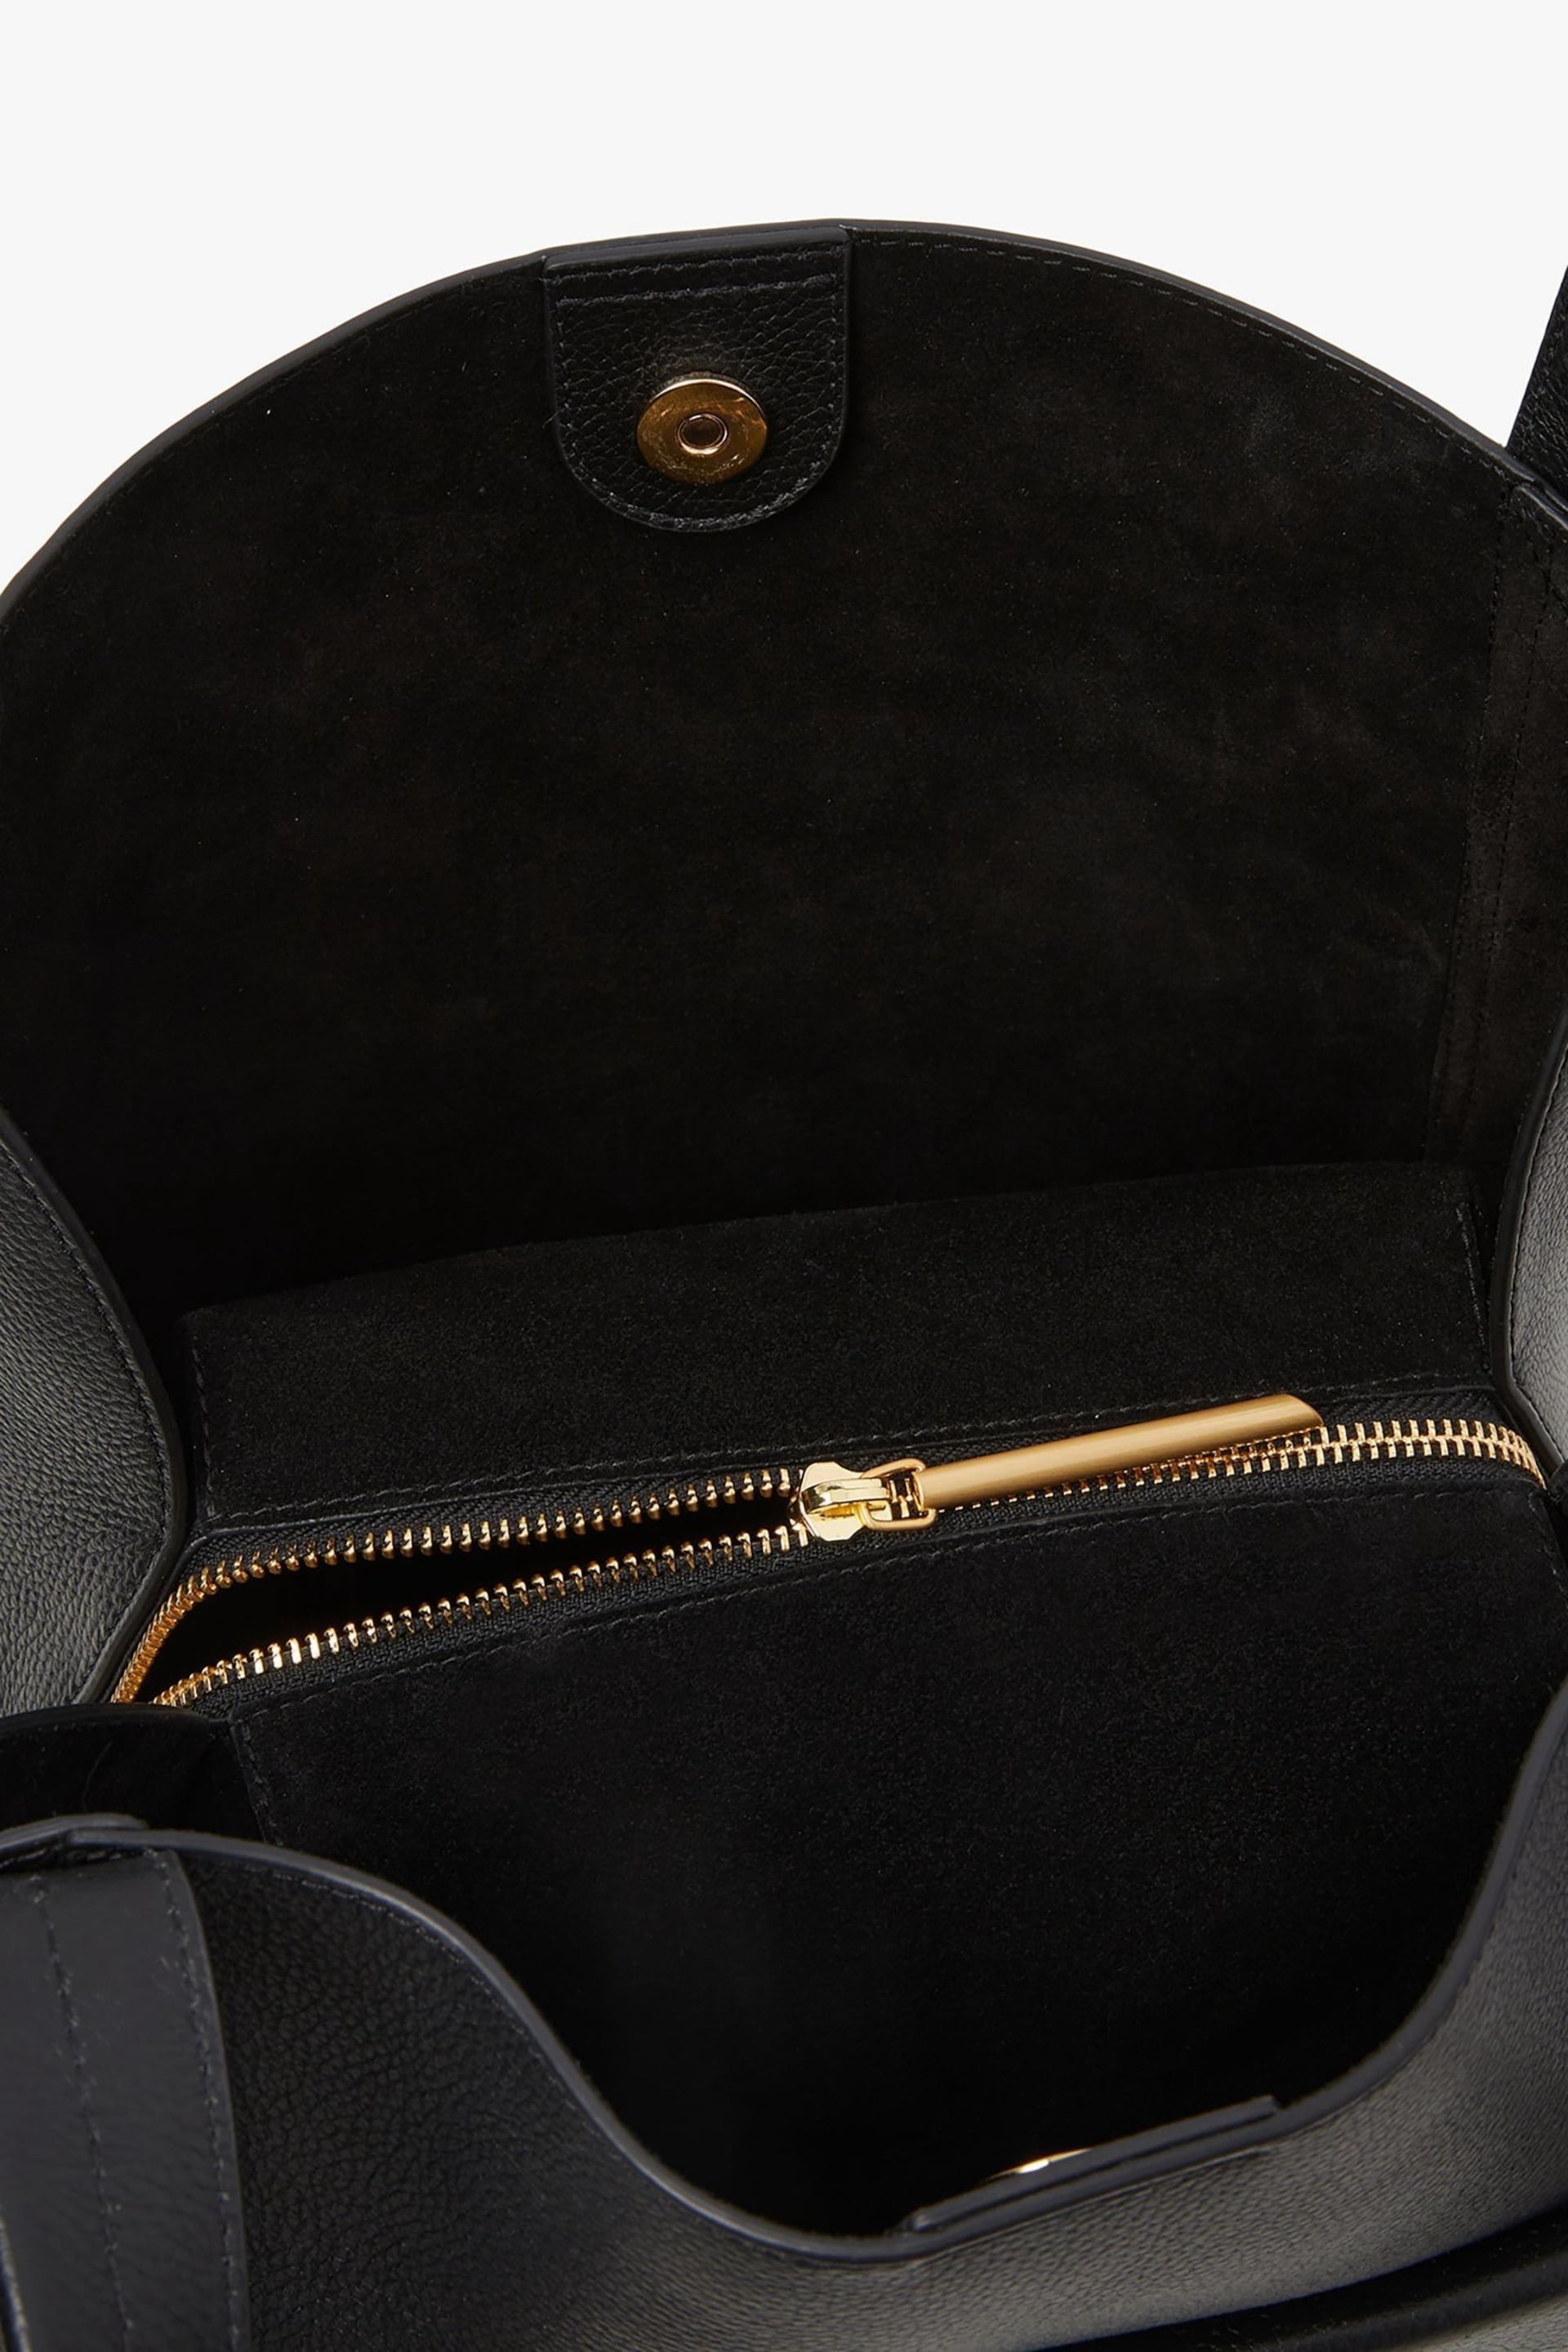 Jasper Conran London Darcey Leather 3 Section Black Hobo Bag - Image 5 of 5